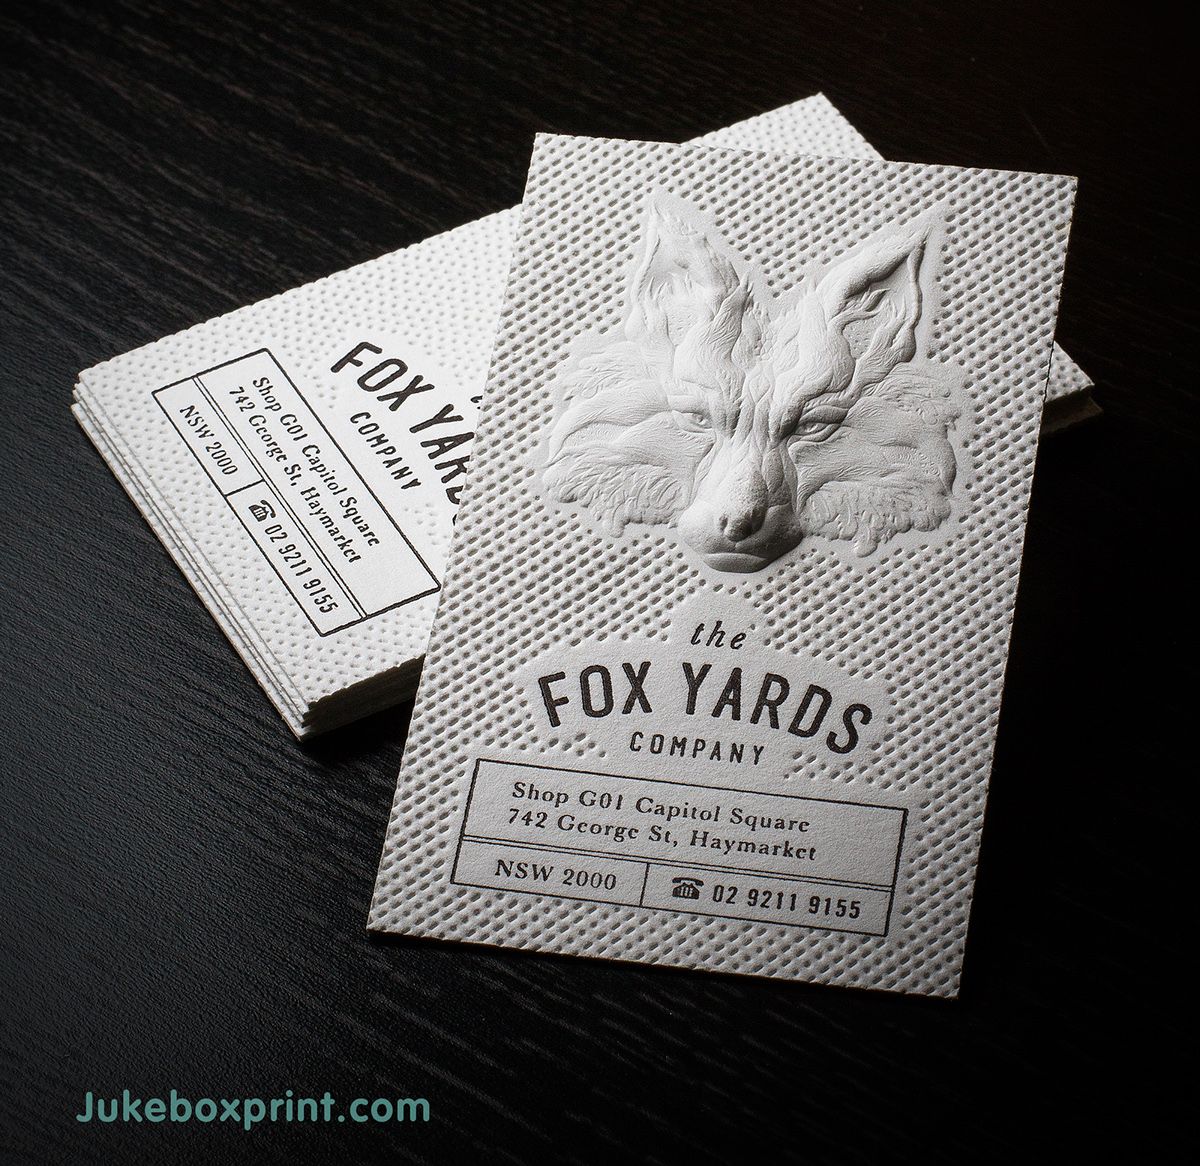 Cartes de visite typographiques: Jukebox Print